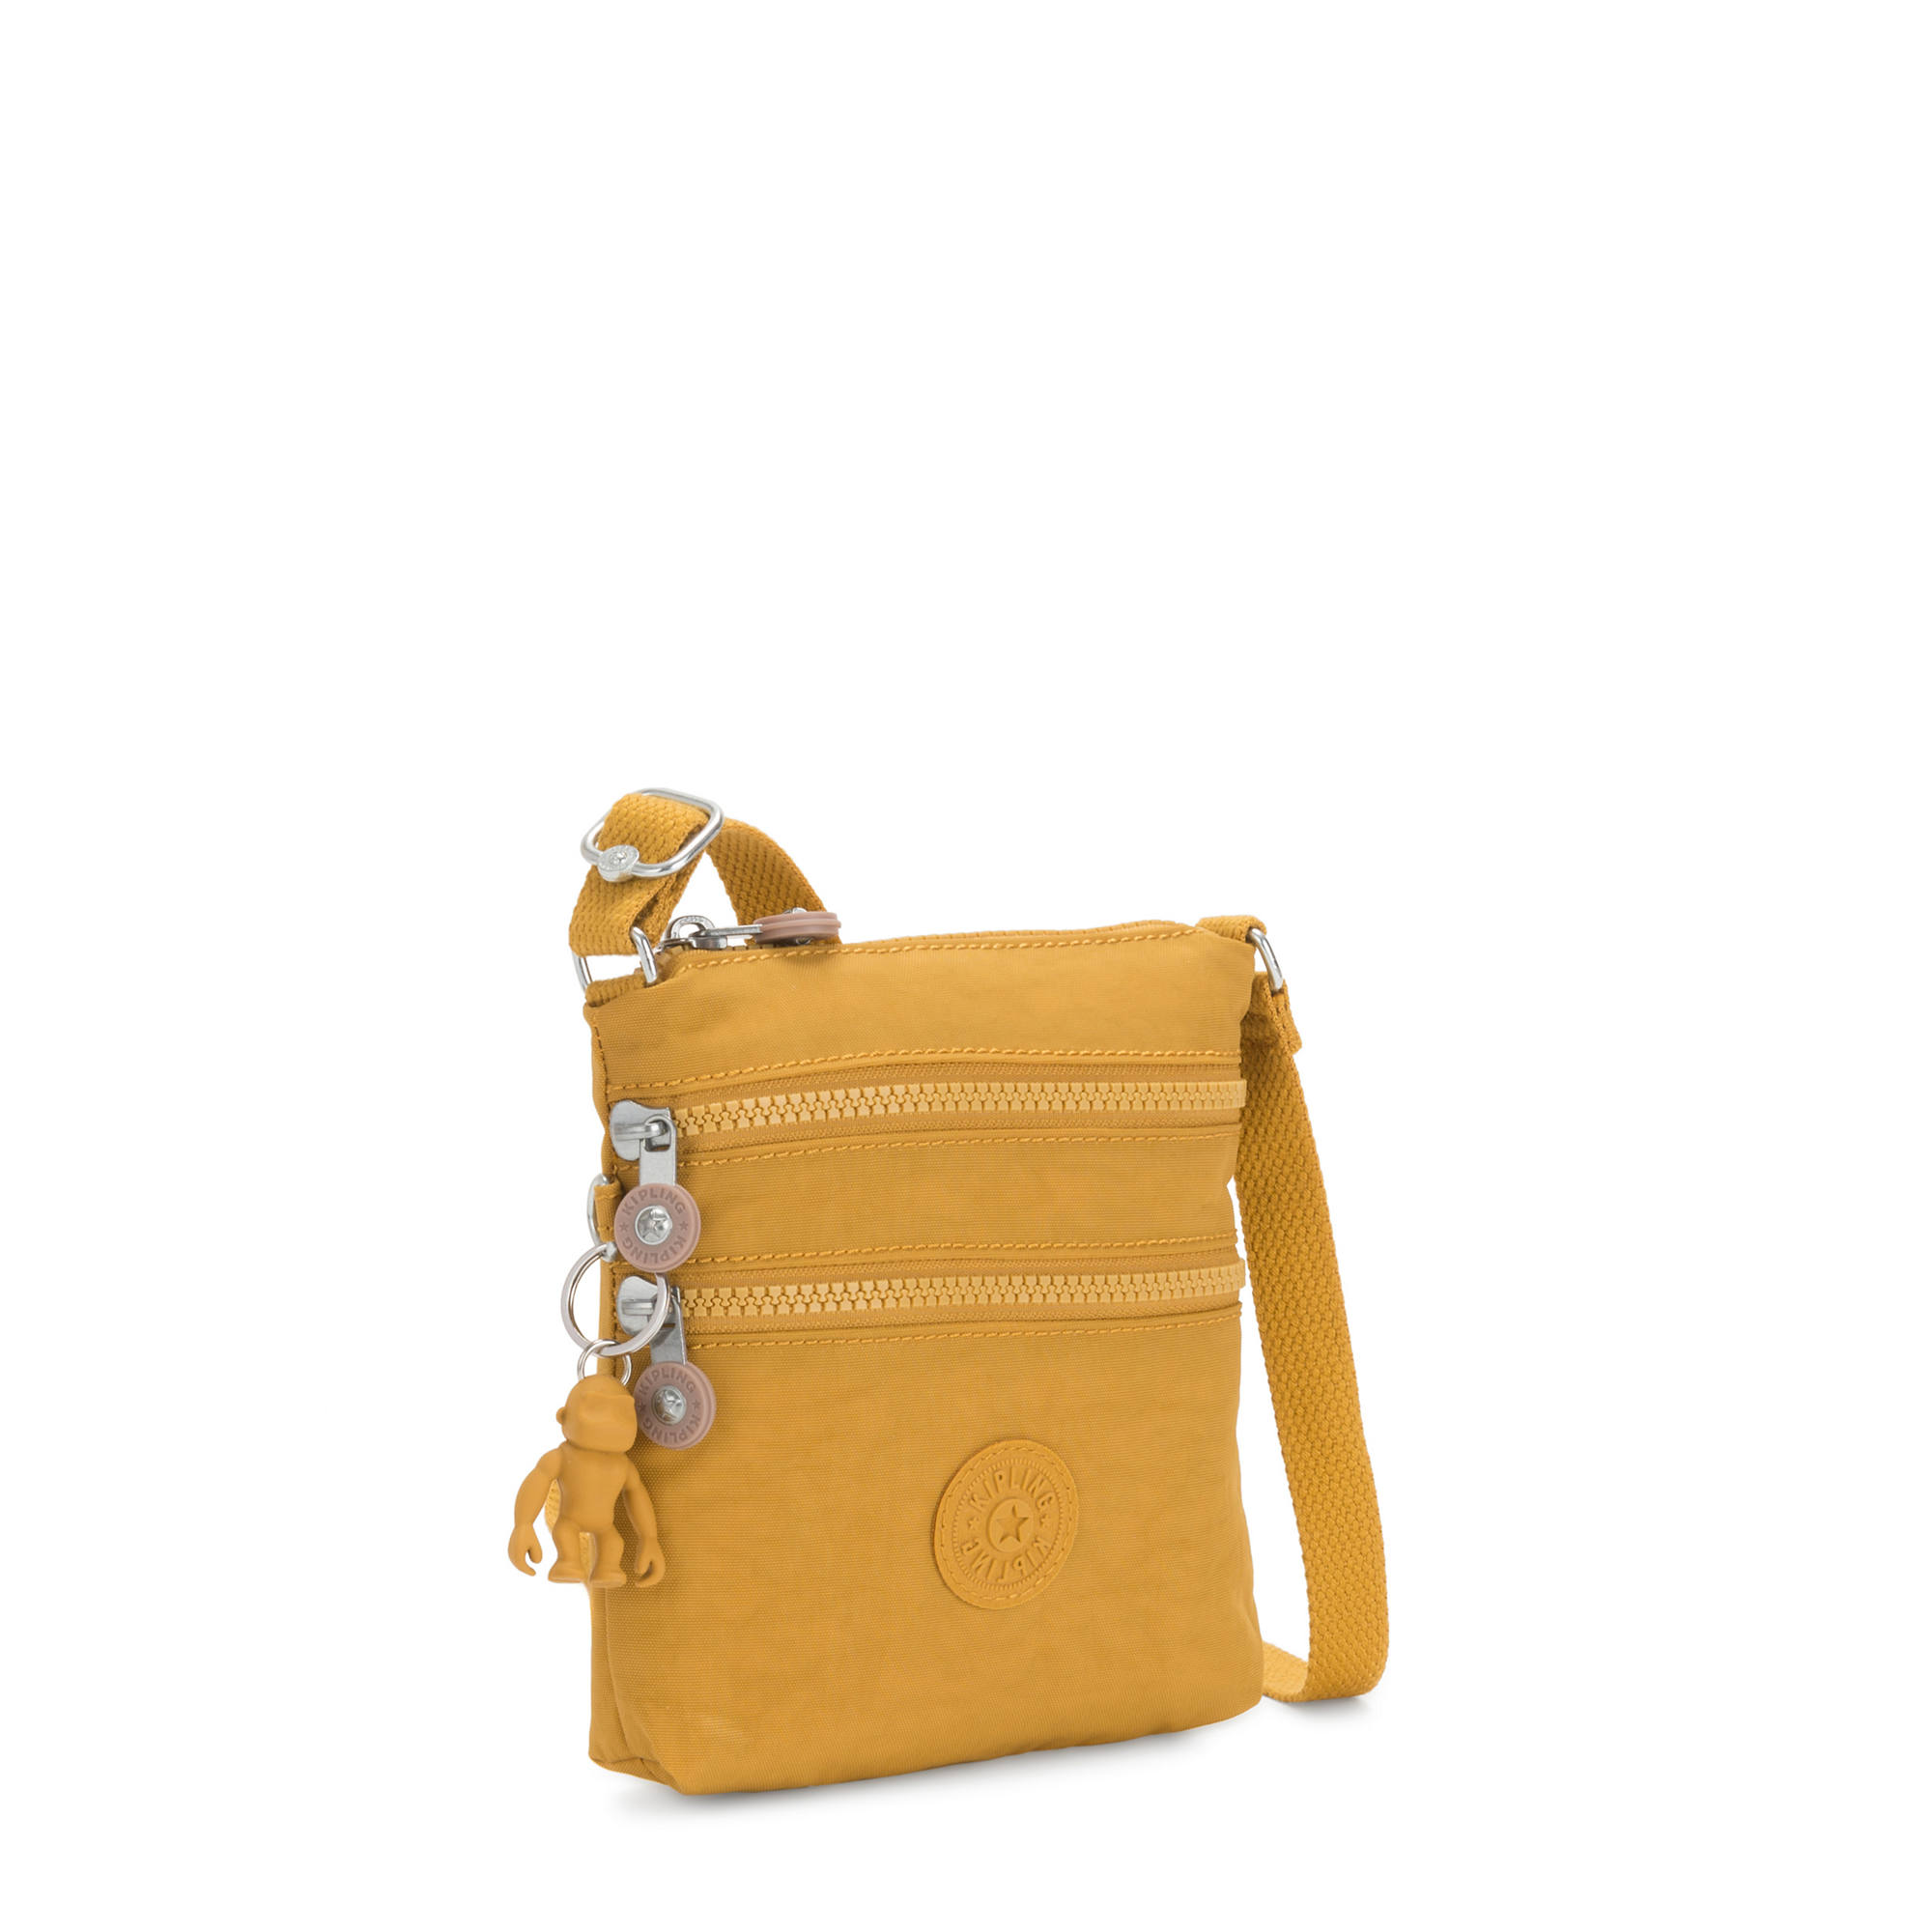 Kipling Alvar Extra Small Metallic Mini Bag | eBay